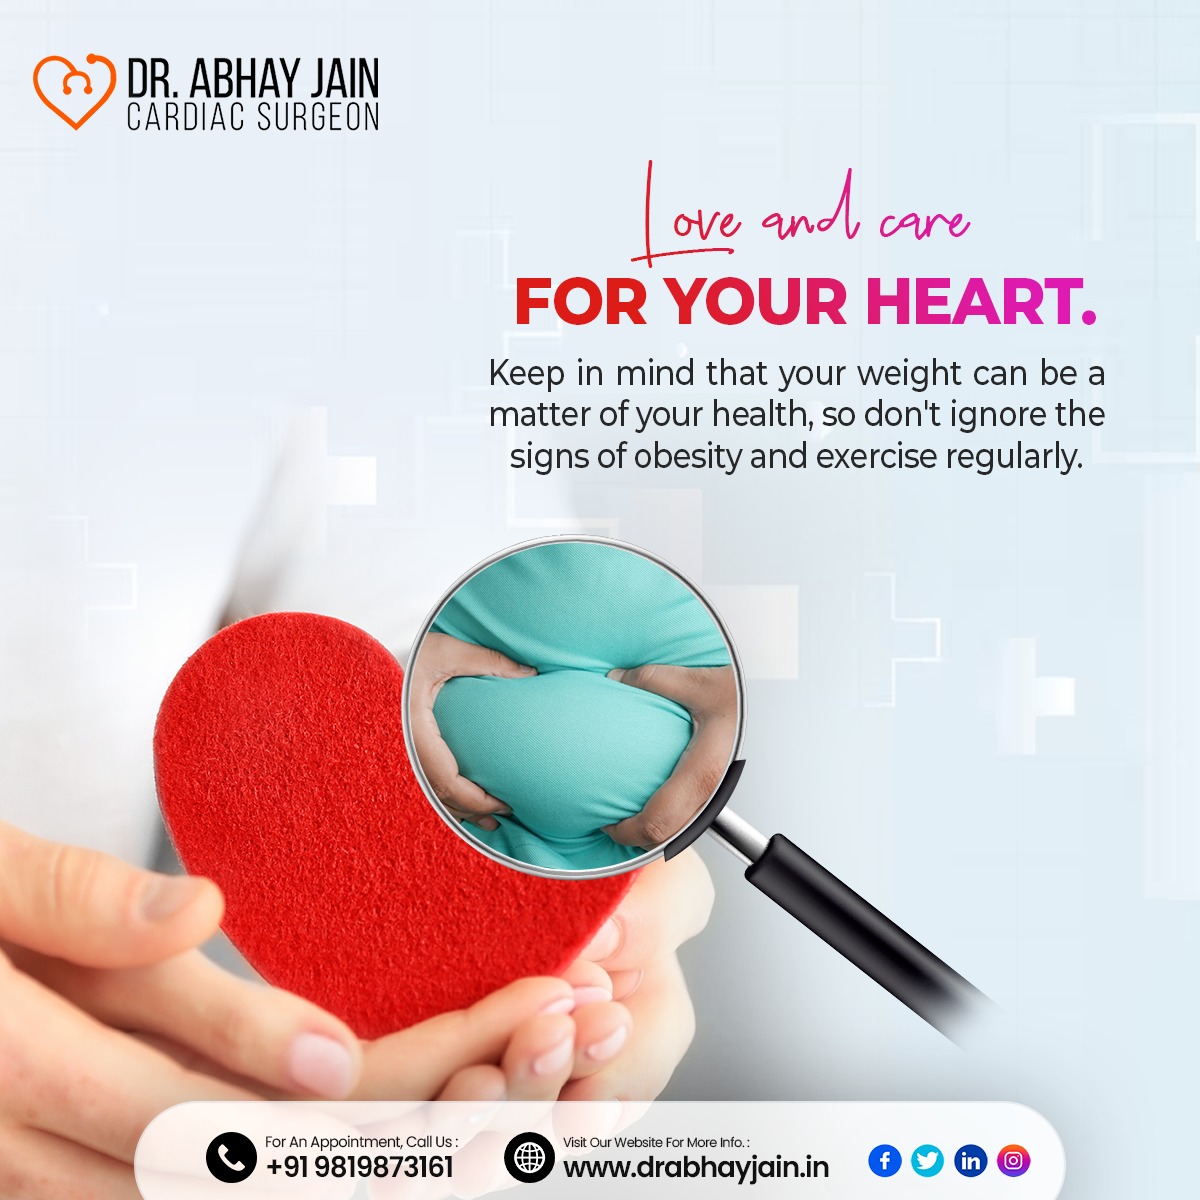 cardiac surgeon in mumbai dr abhay jain